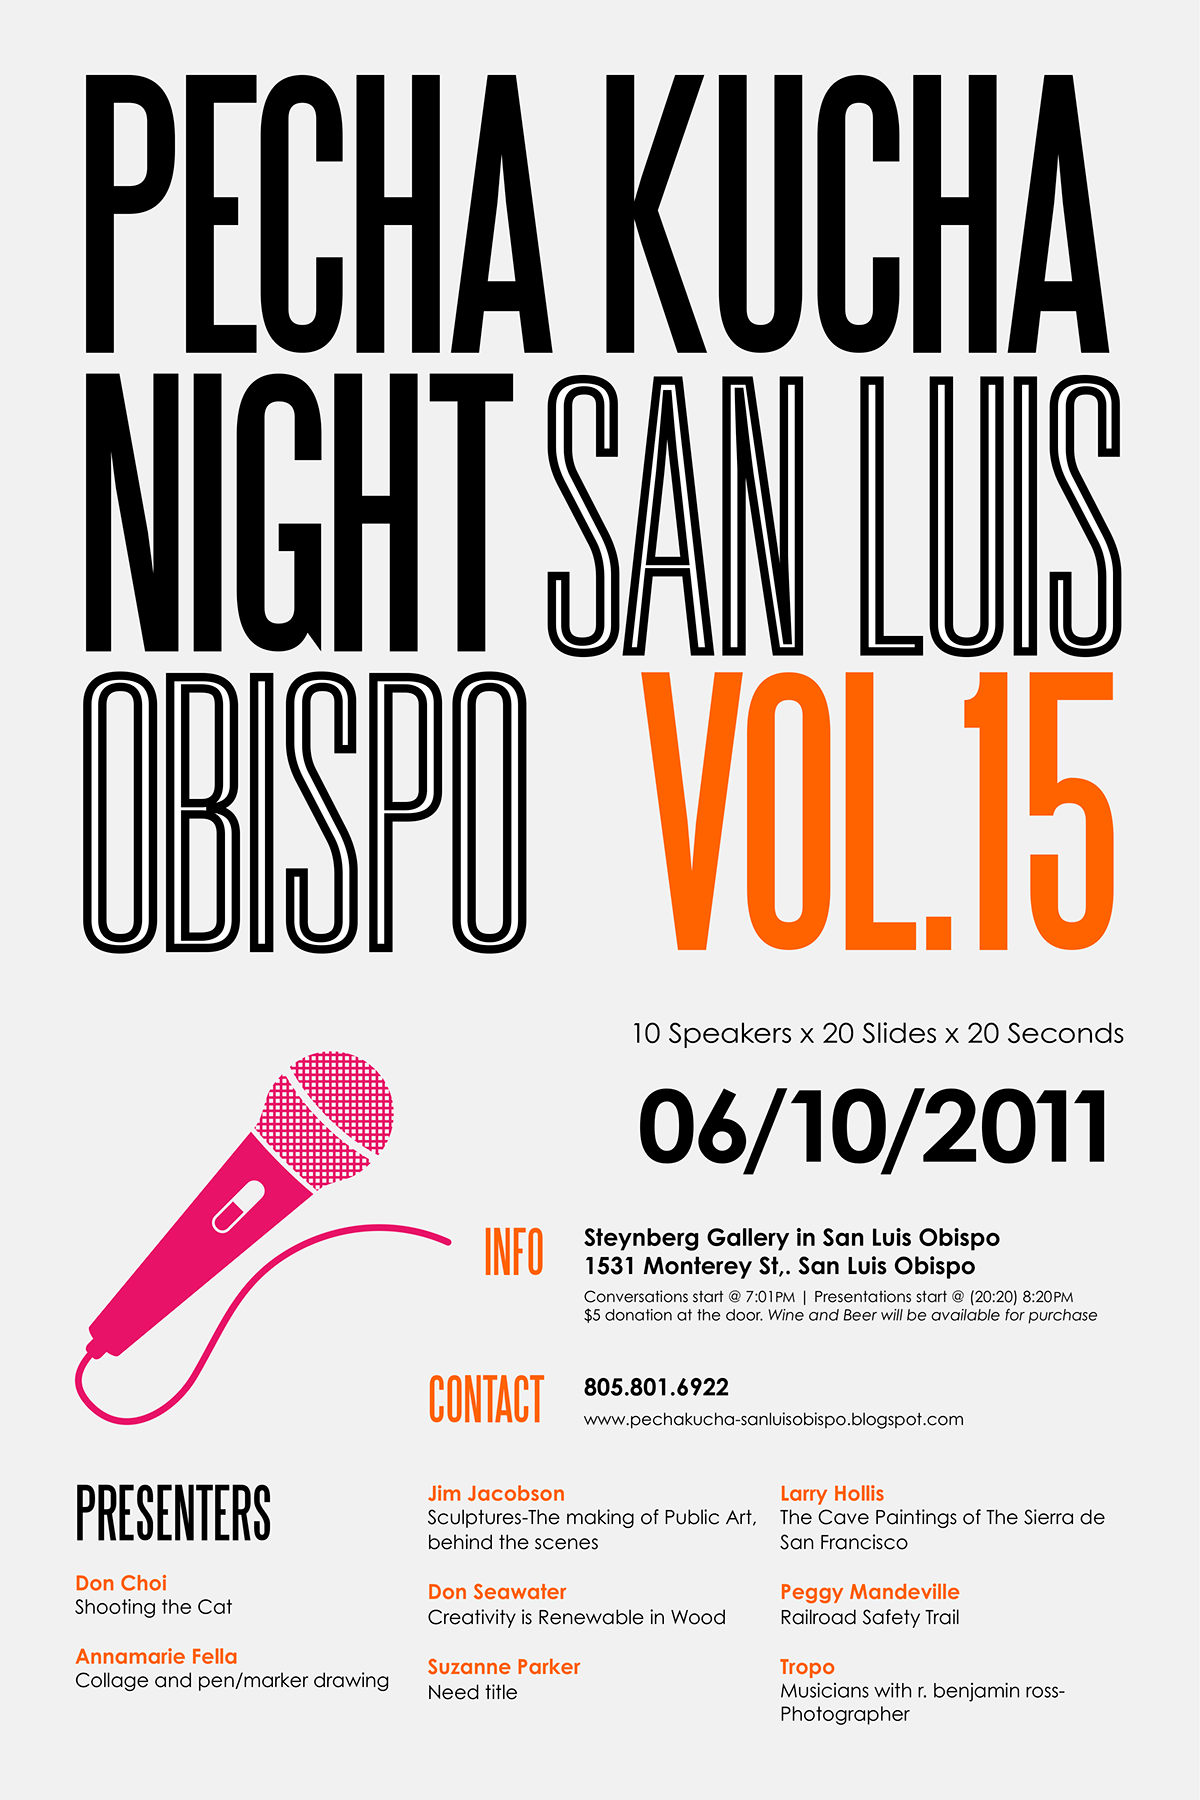 Event san luis obispo Volume speakers images 20 seconds poster